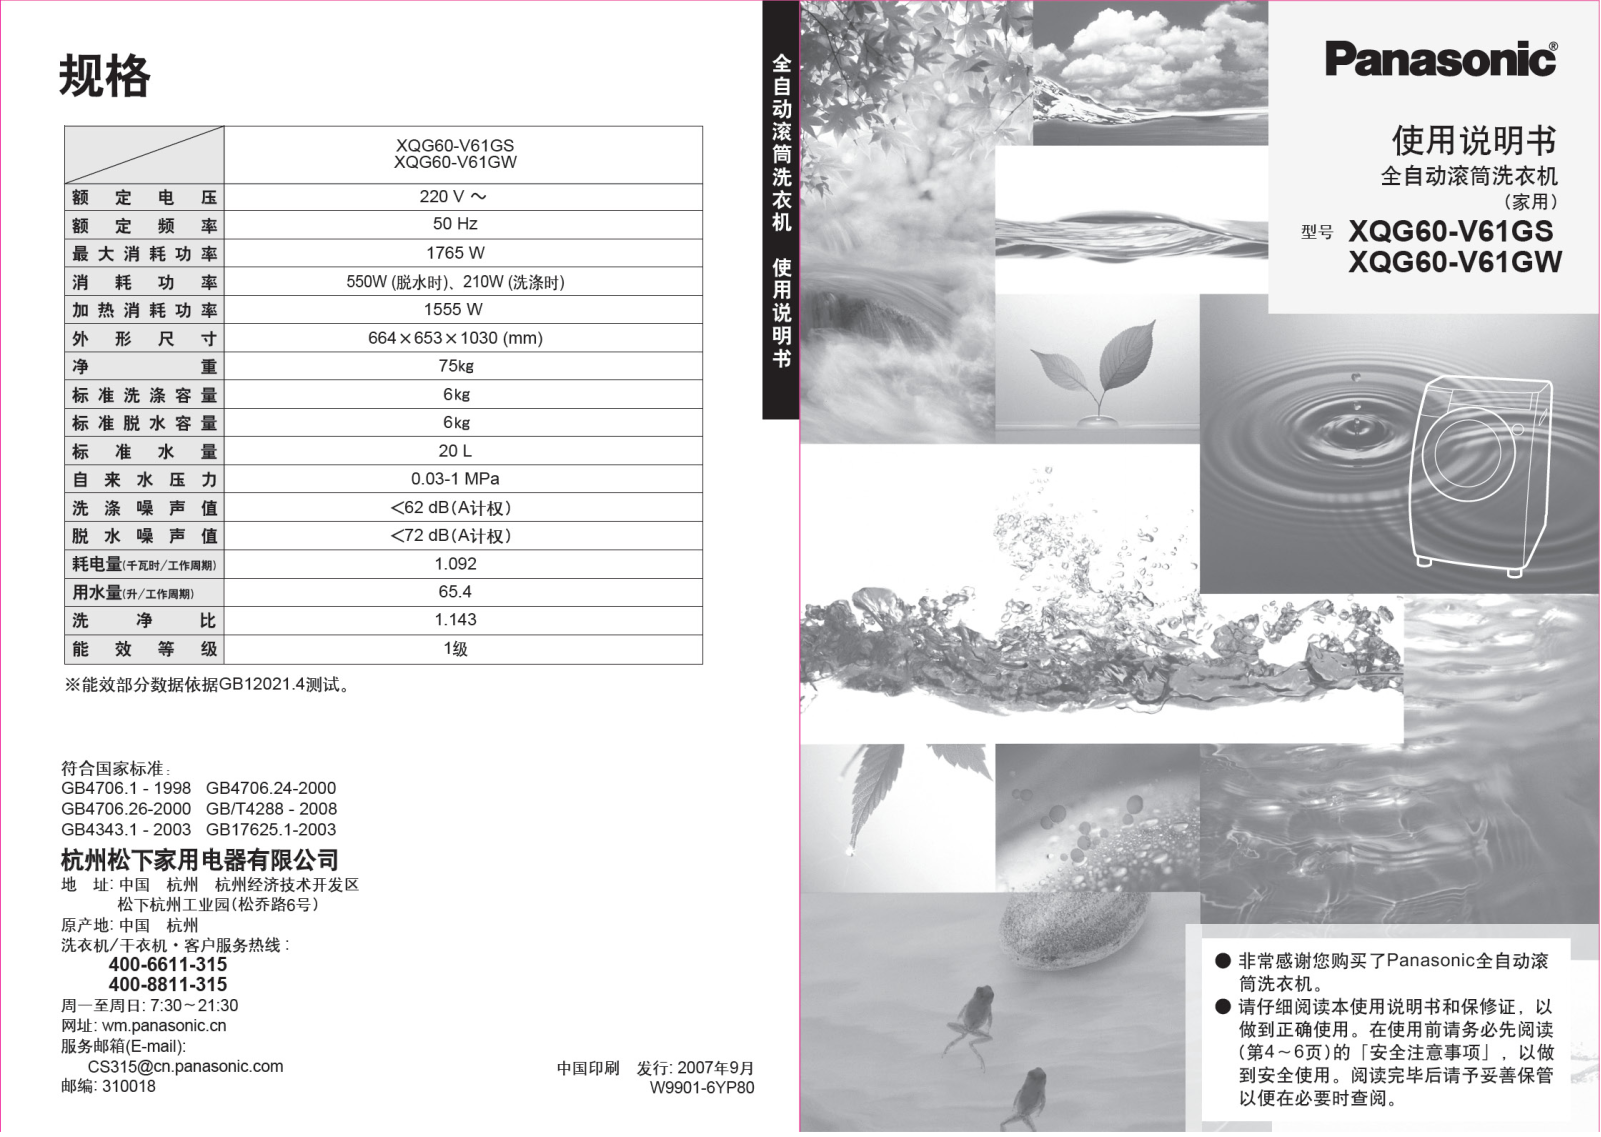 Panasonic XQG60-V61GS, XQG60-V61GW User Manual